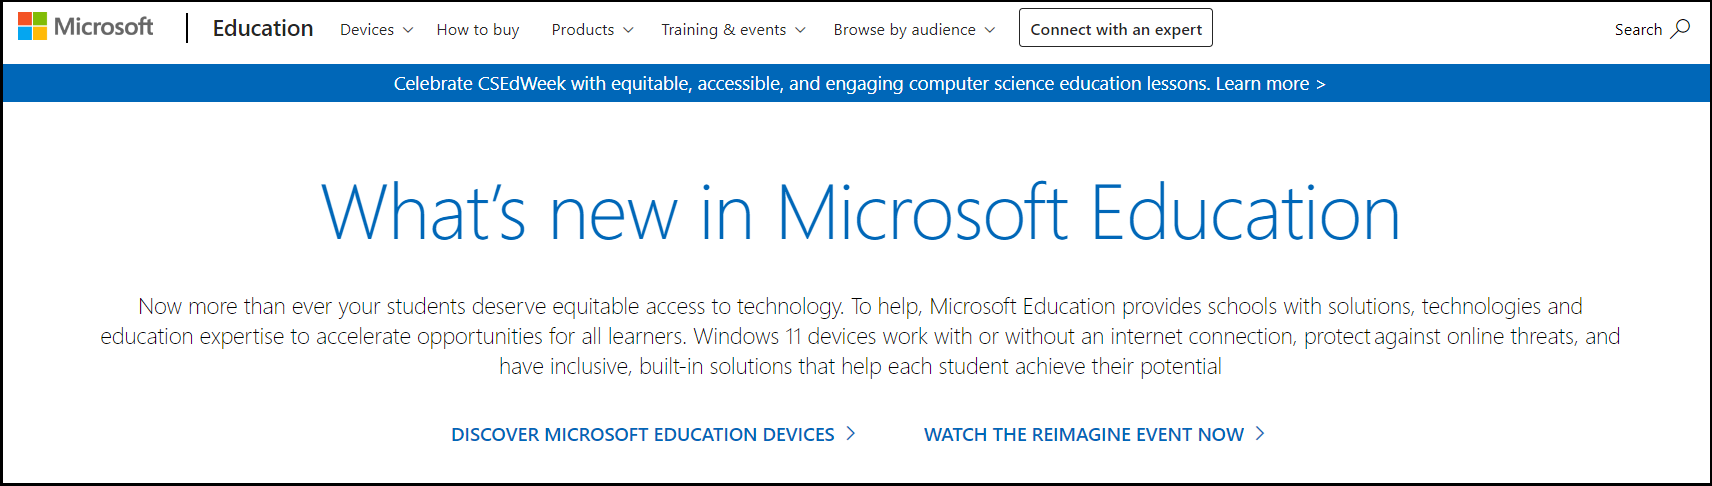 Microsoft Office 365 Education web page